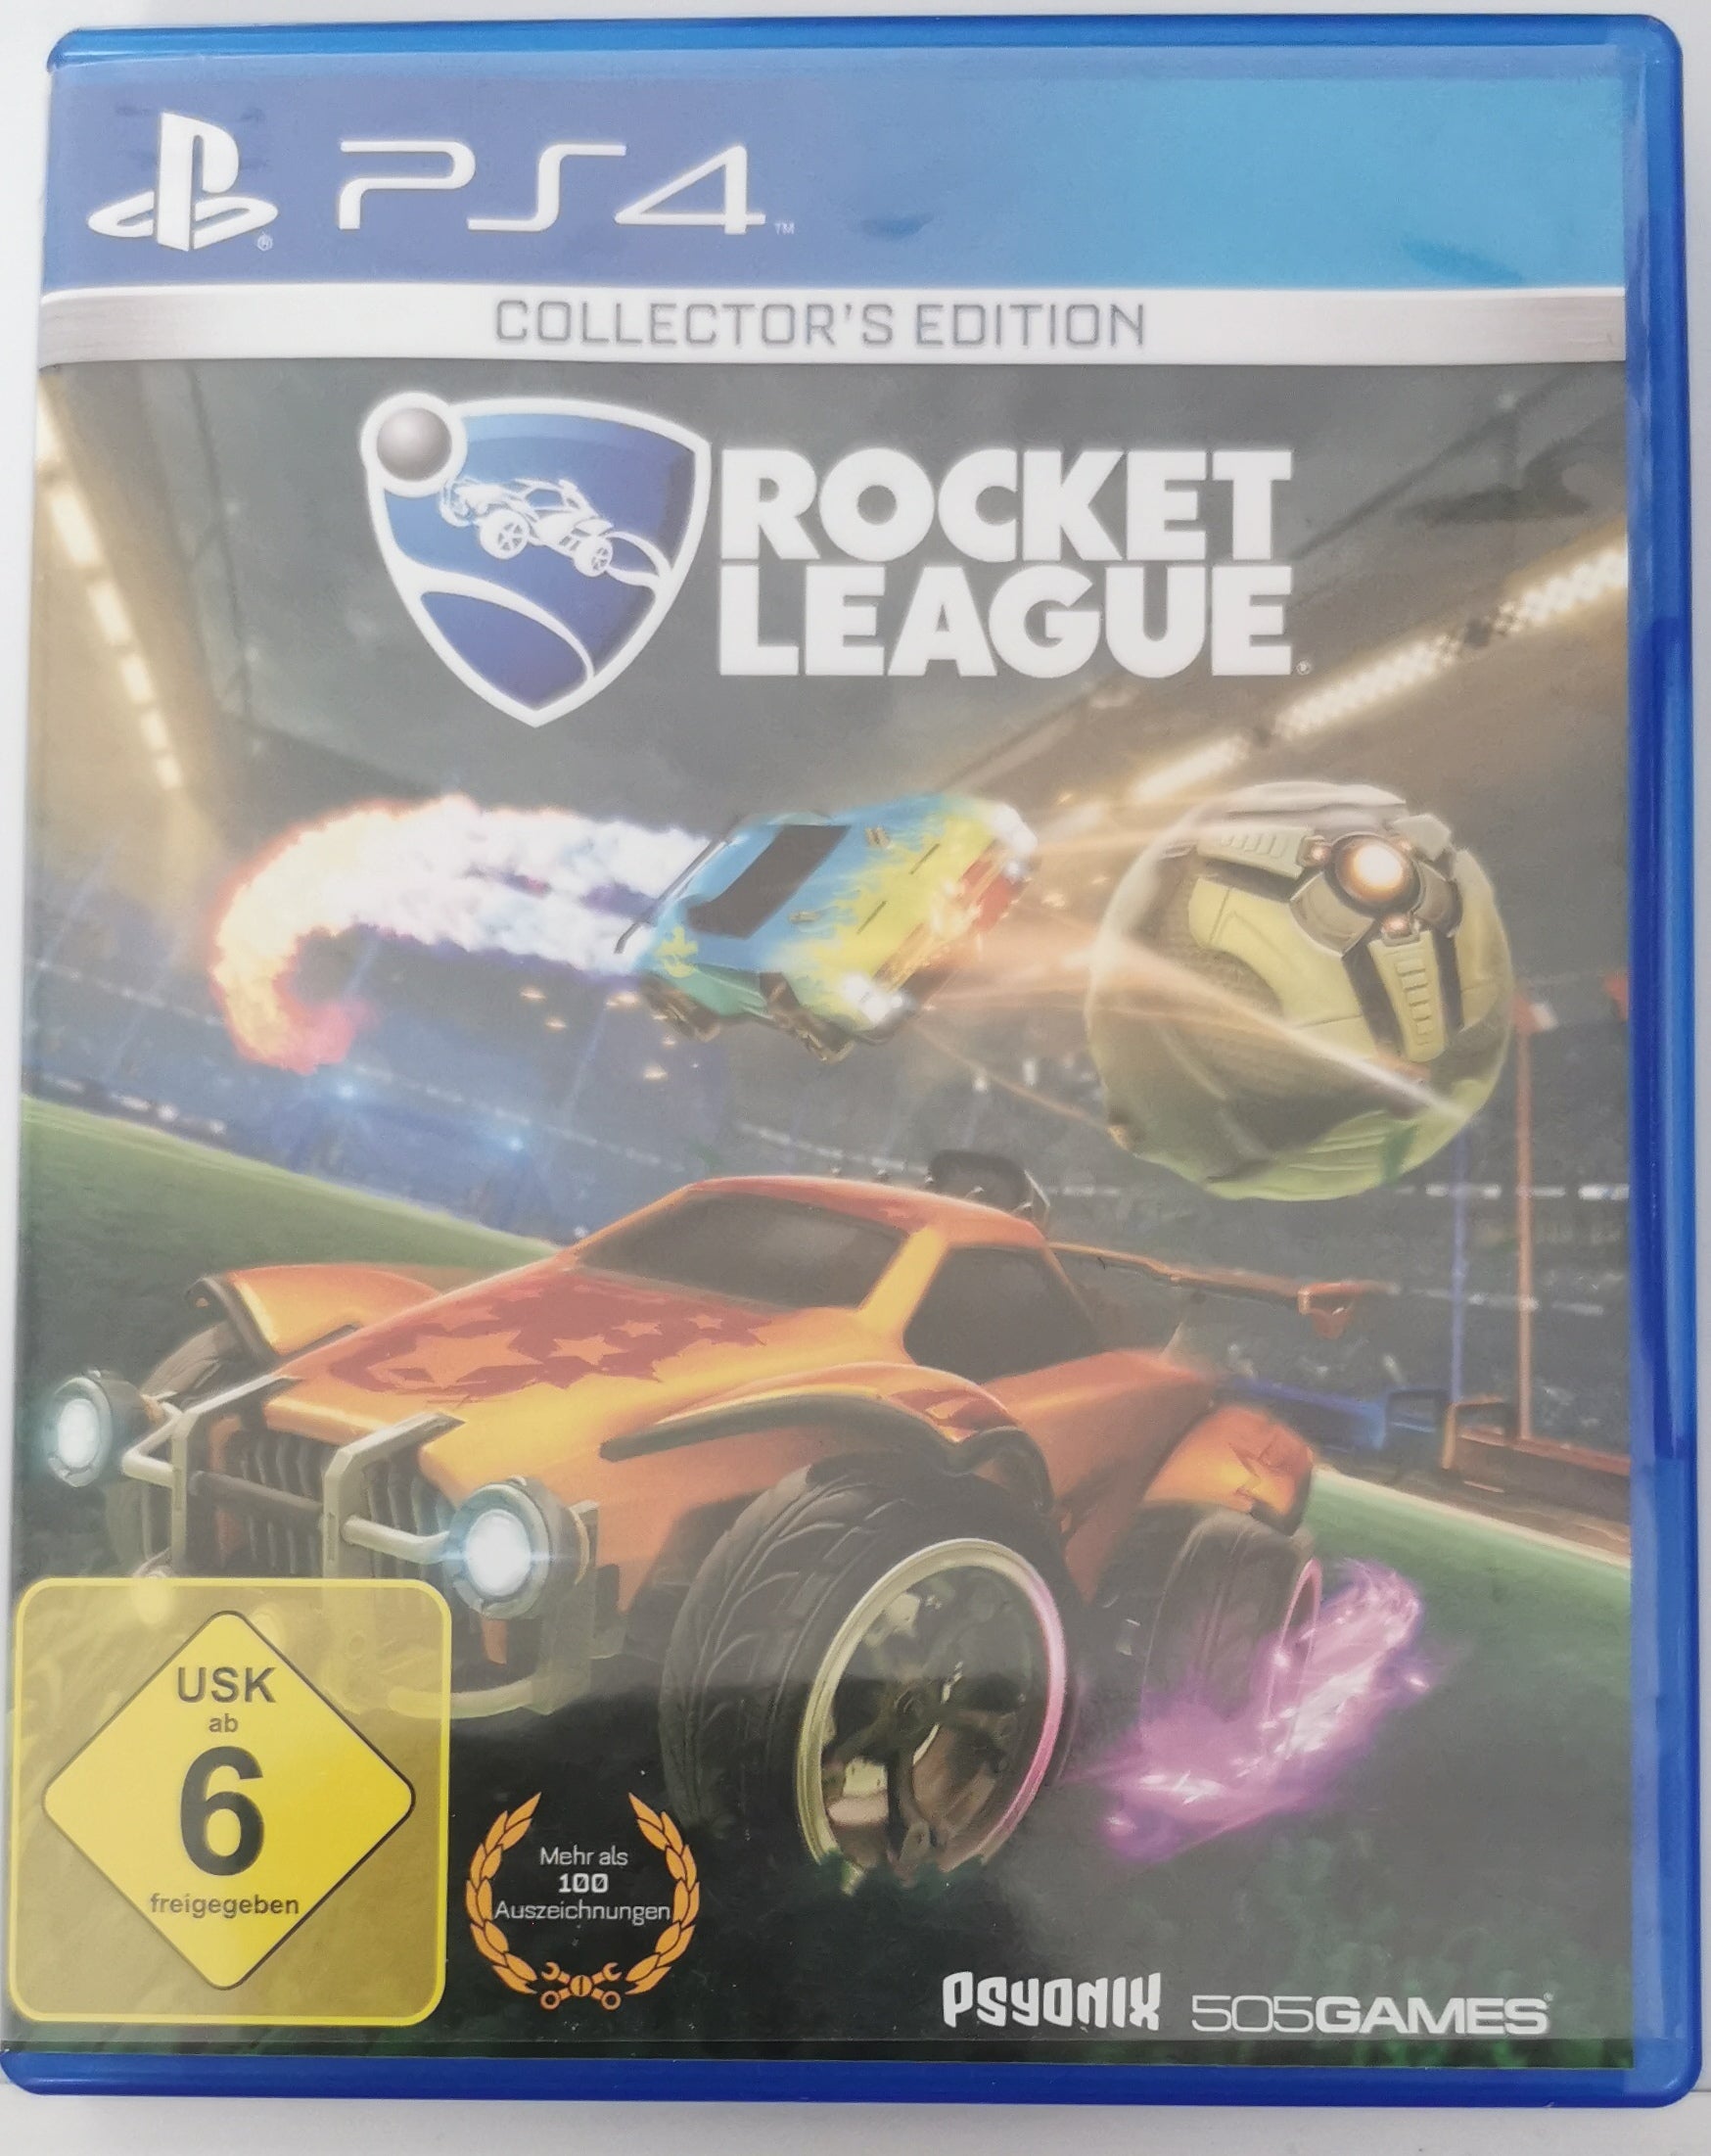 Rocket League Collectors Edition PS4 (Playstation 4) [Gut]